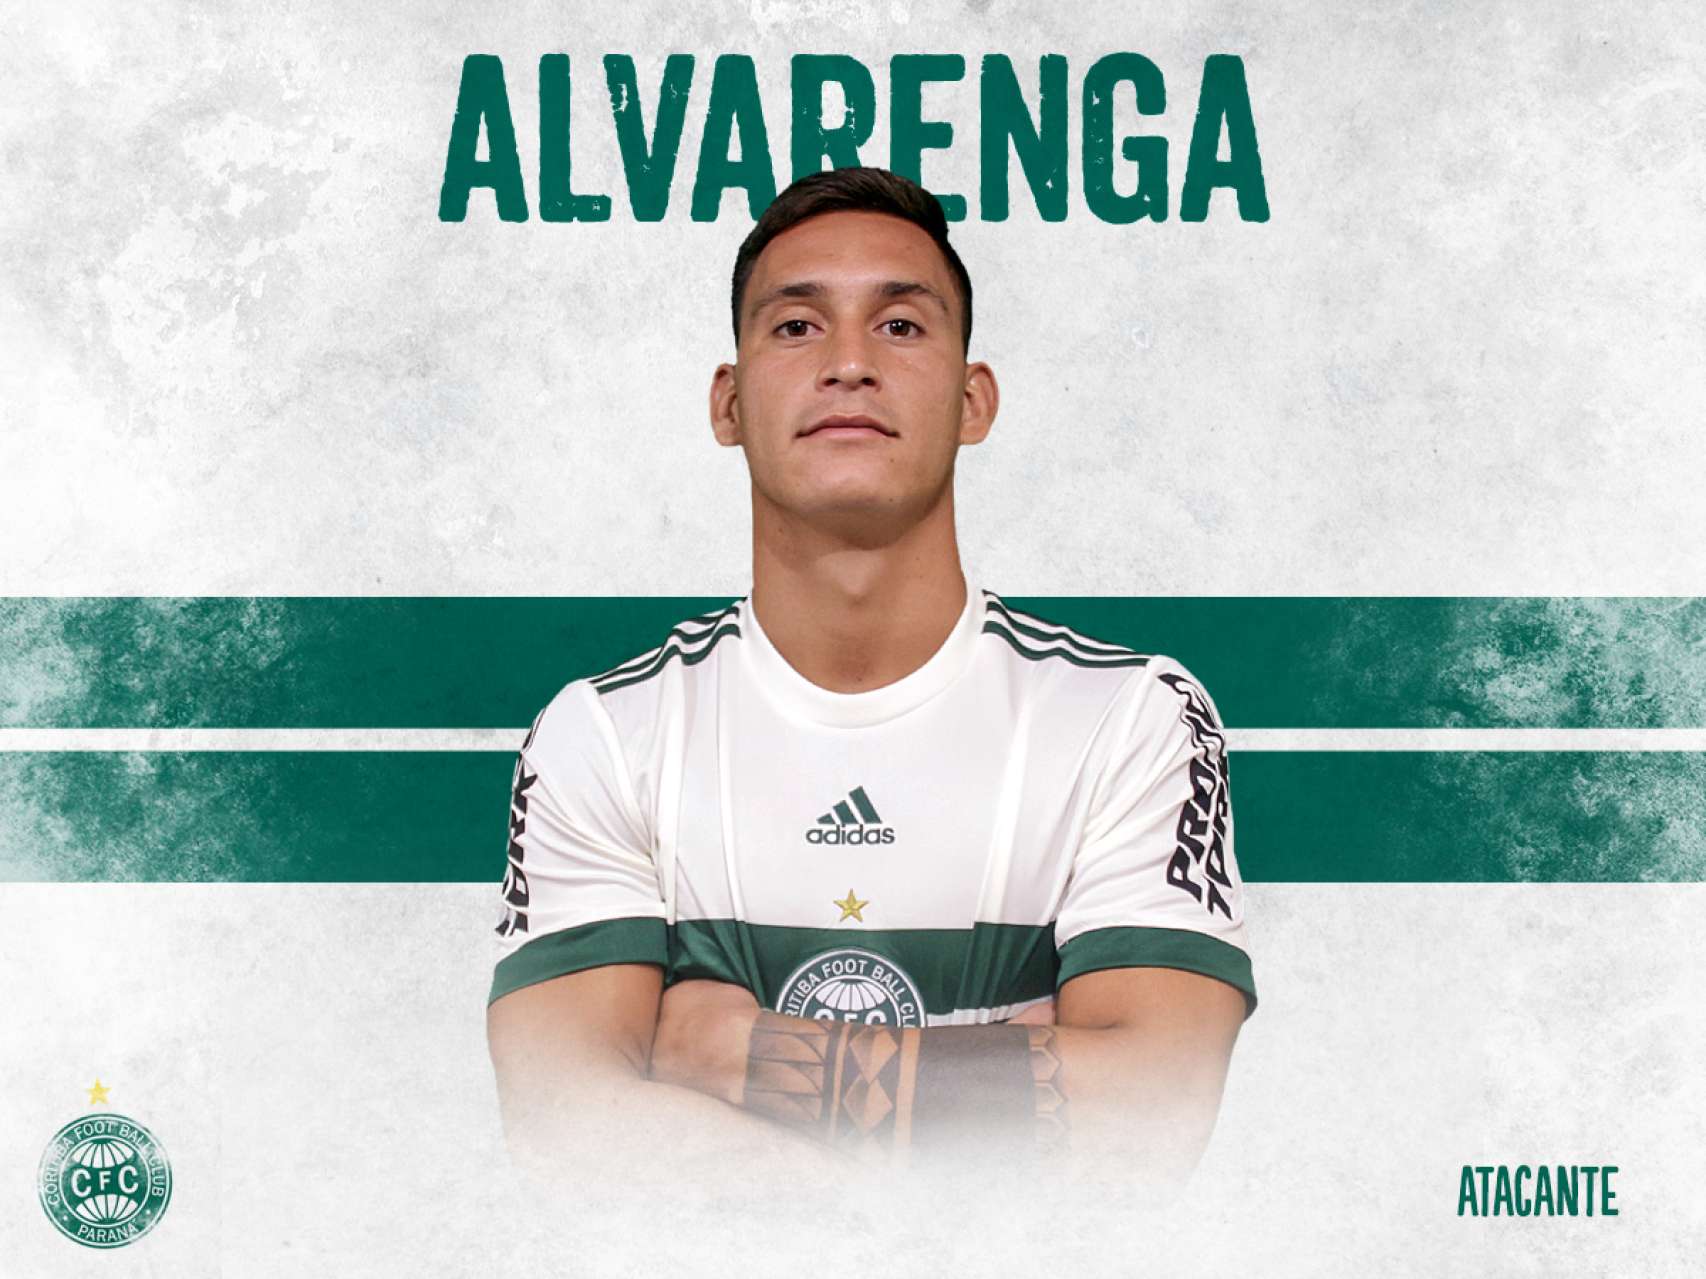 Bienvenido, Alvarenga!